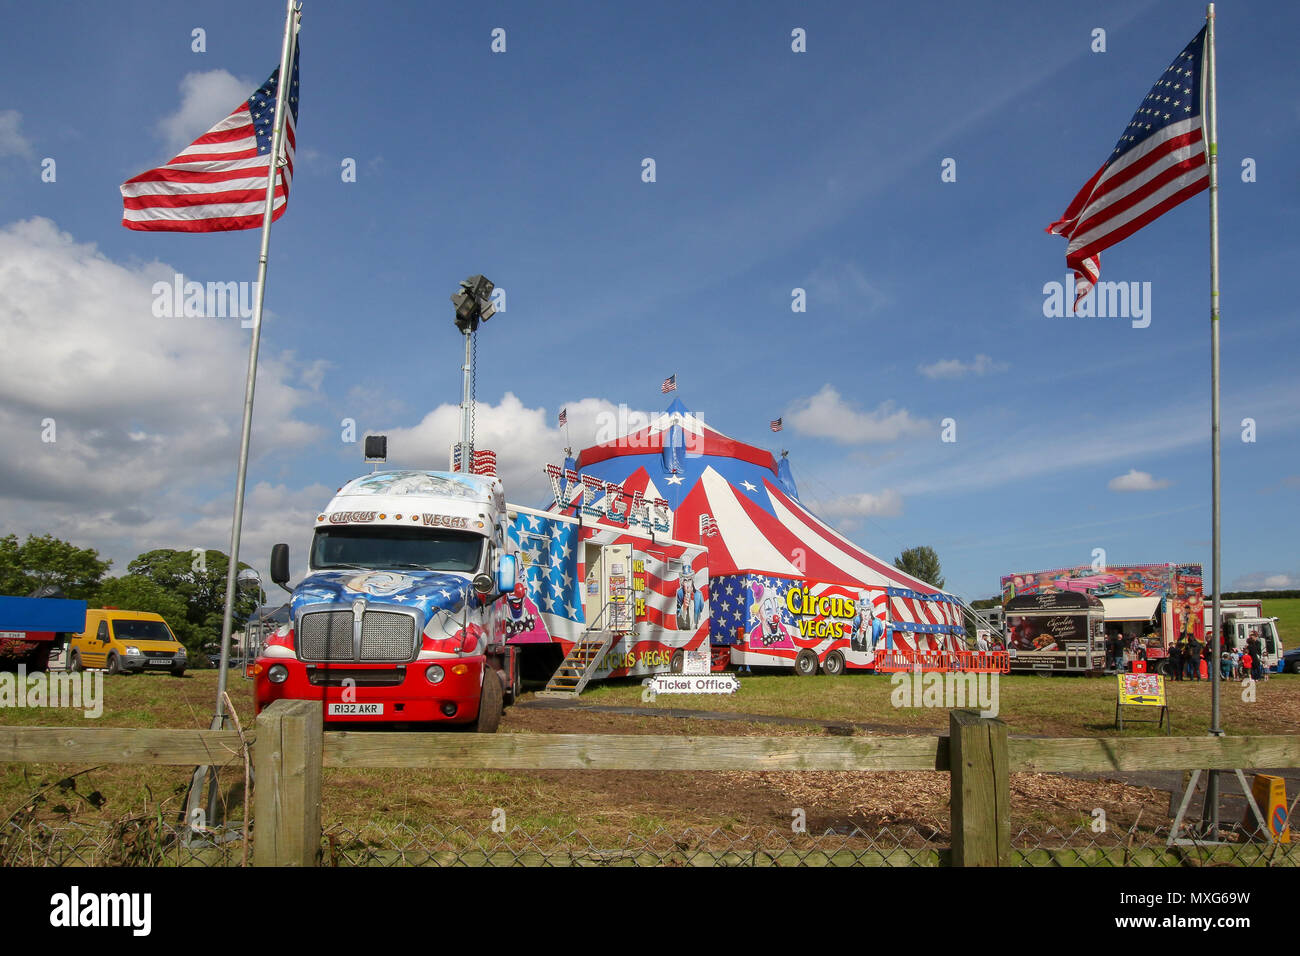 Zirkus Lkw und Zirkuszelt in einem Feld - Circus Las Vegas reisen Nordirland. Stockfoto